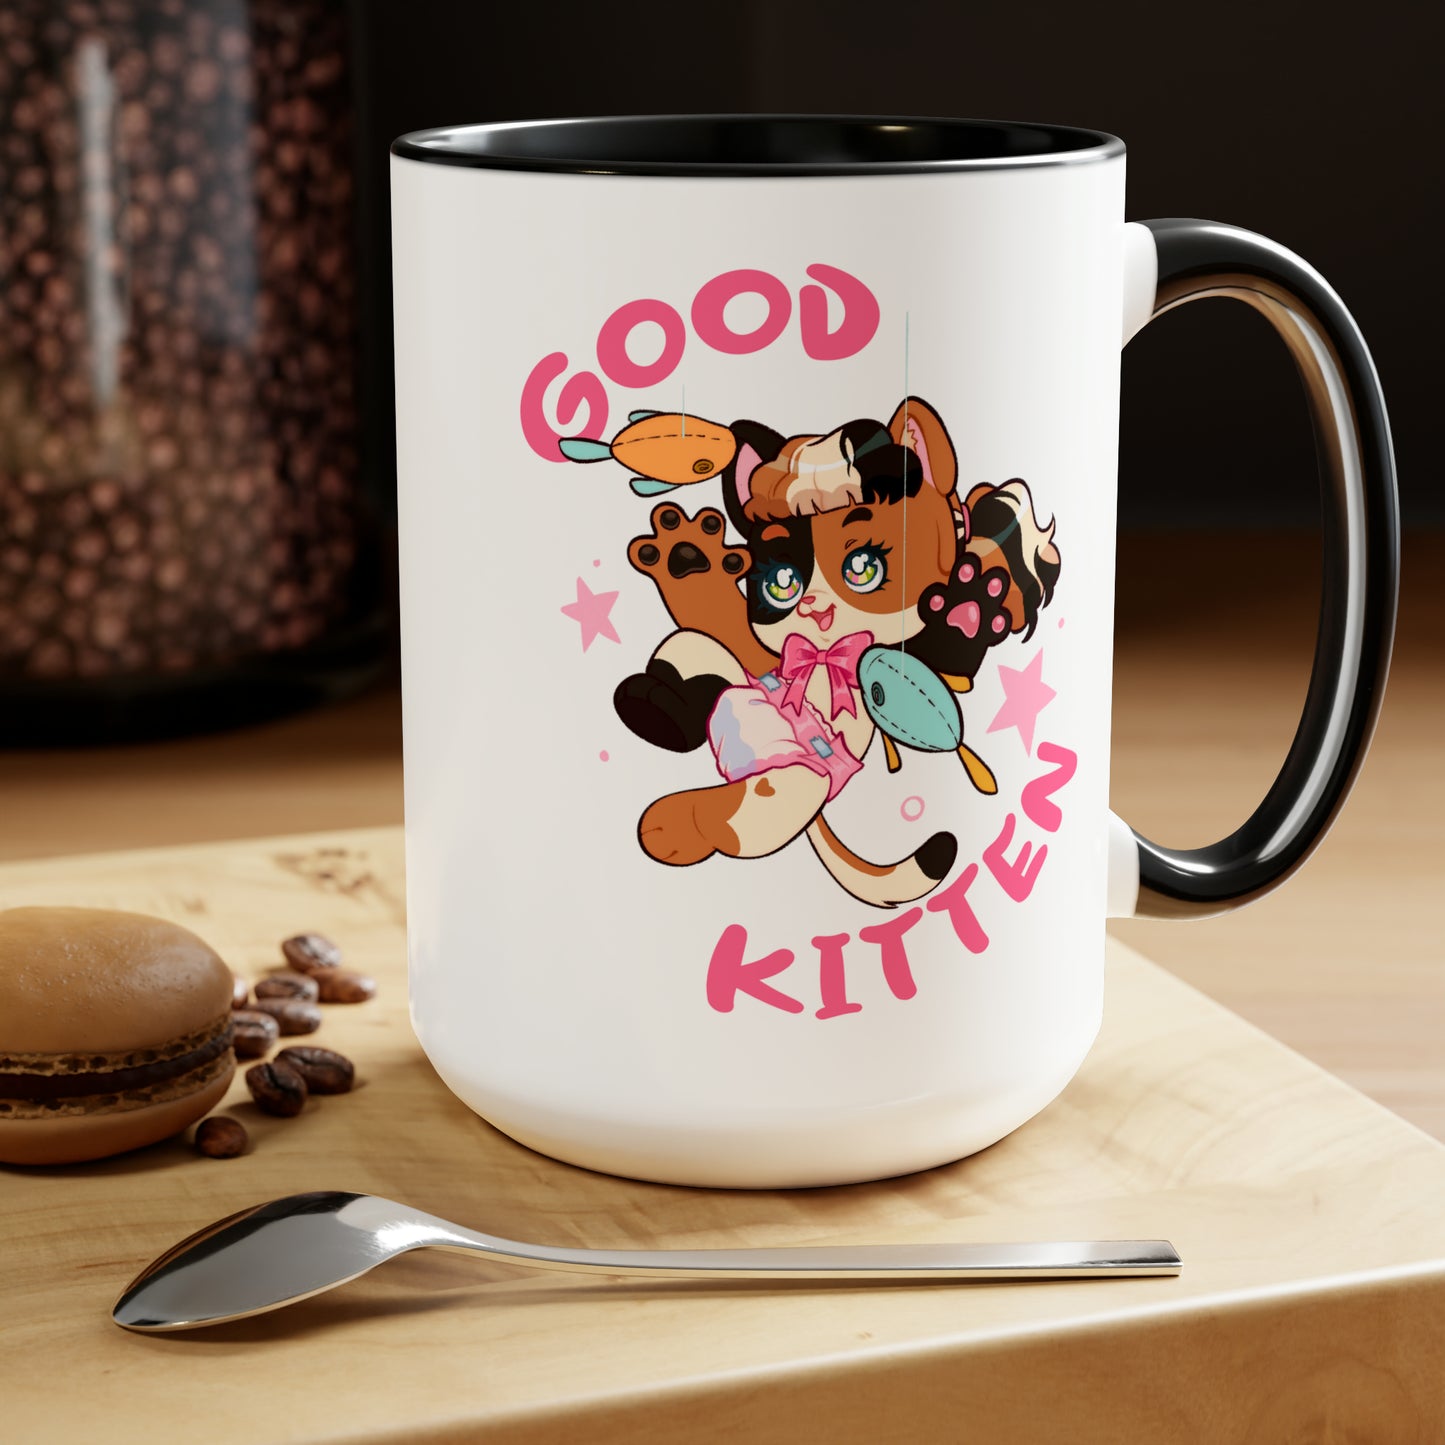 Good Kitten, Playful Two-Tone Mugs, 15oz